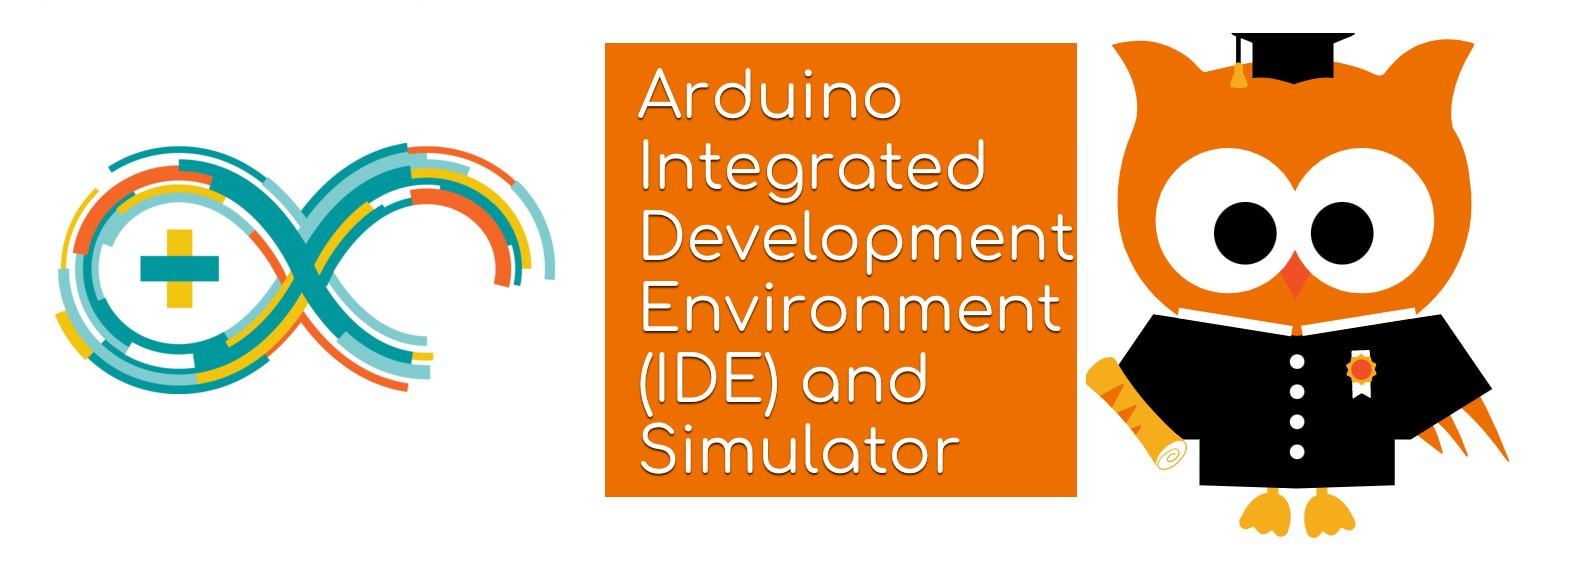 Module 2. Arduino Integrated Development Environment (IDE) and Simulator